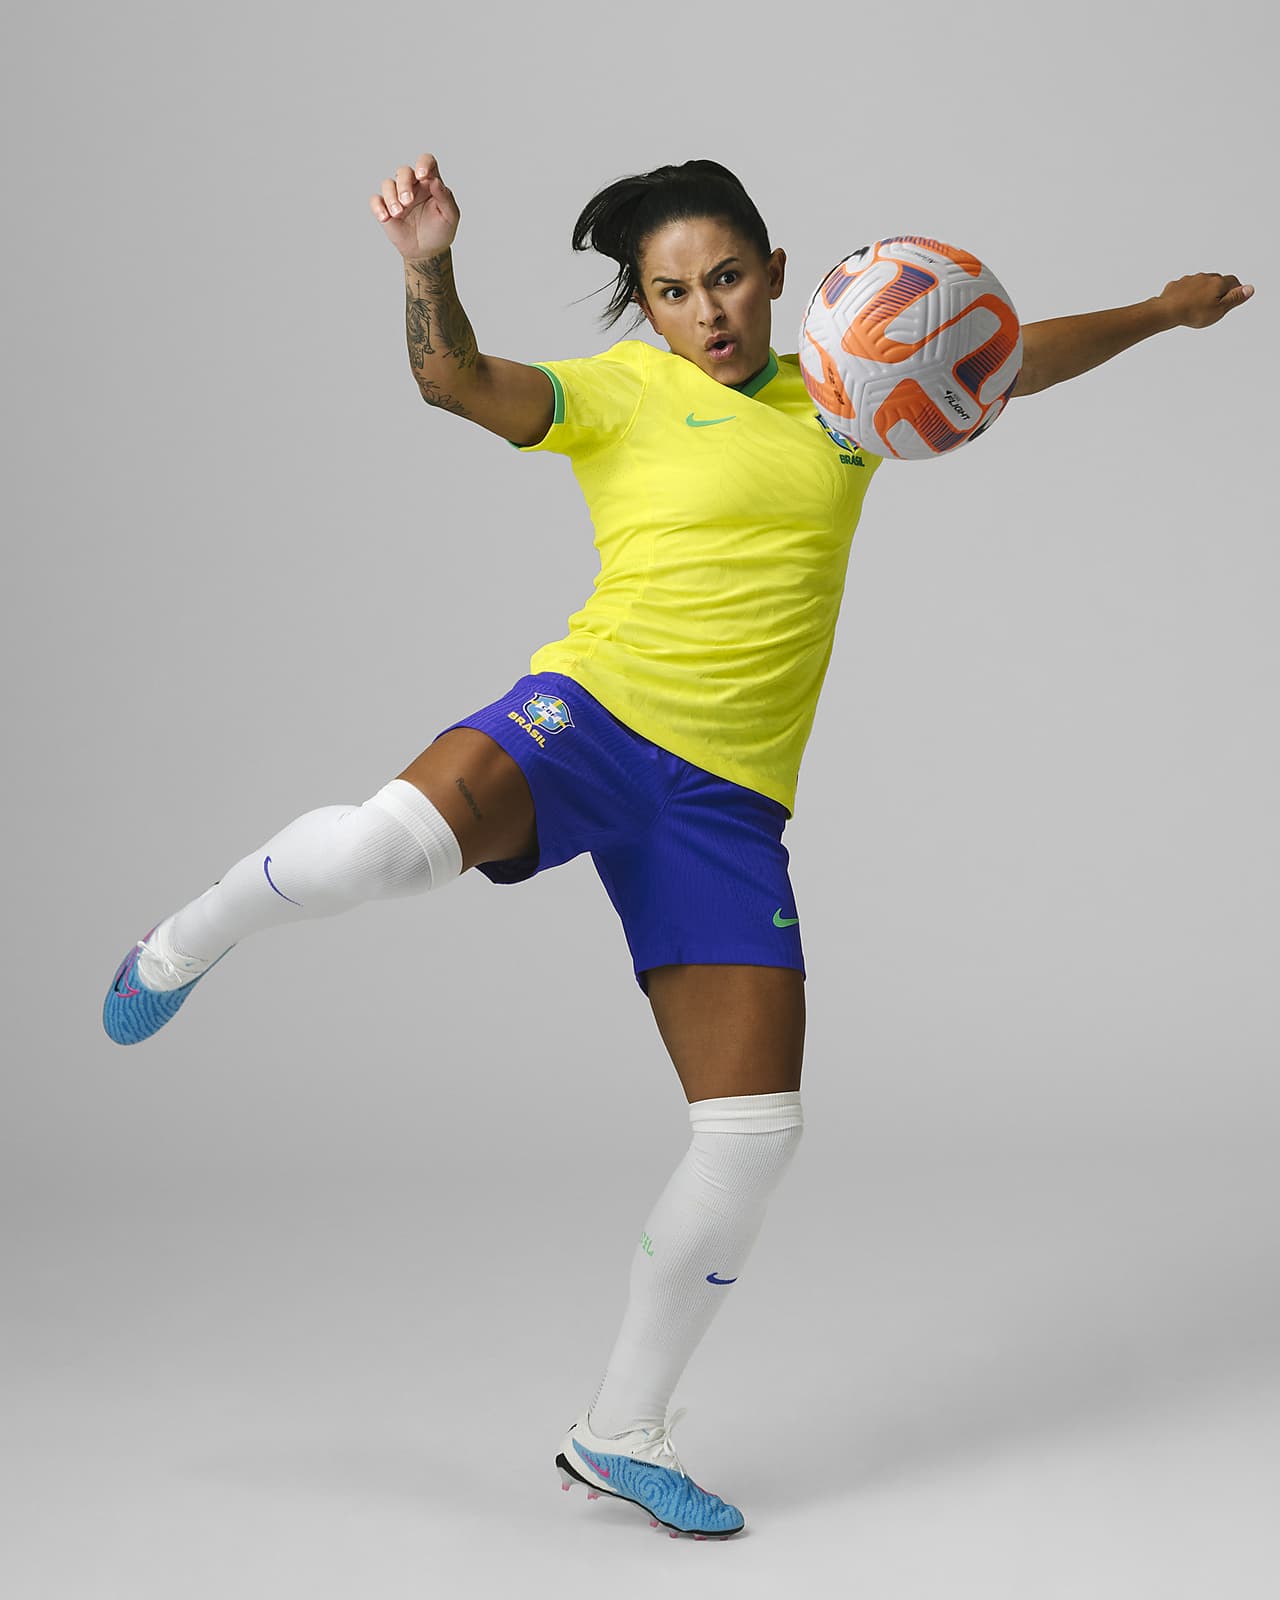 Brazil 2023 Stadium Away Women's Nike Dri-FIT Football Shirt